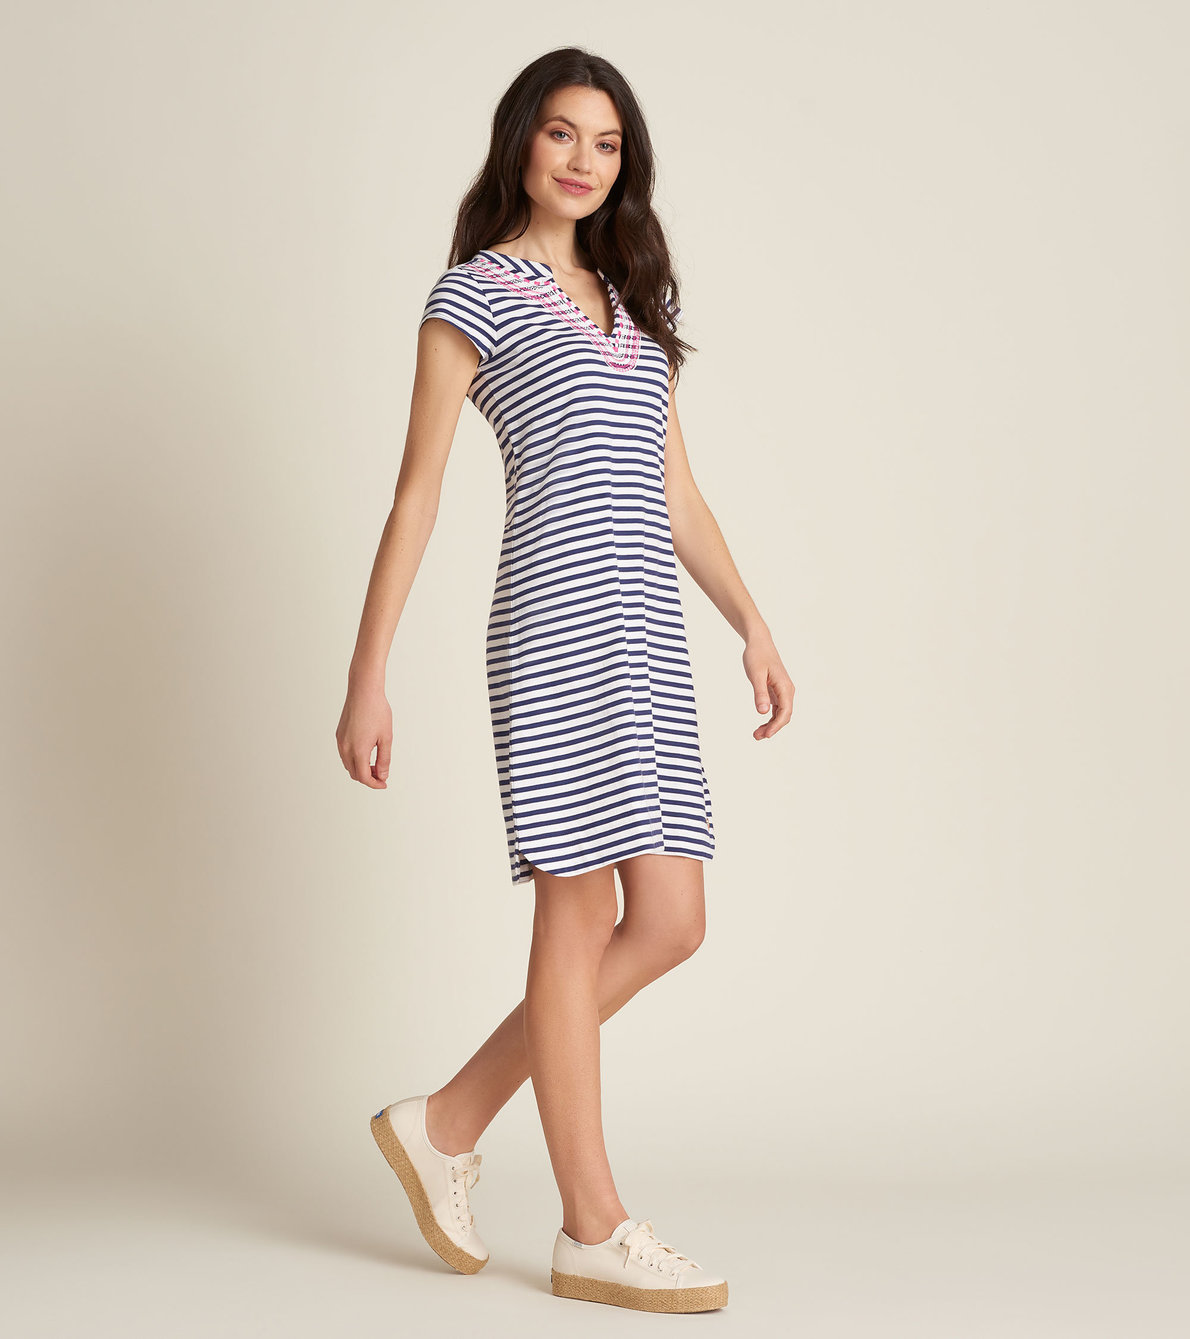 View larger image of Zara Dress - Navy Stripes